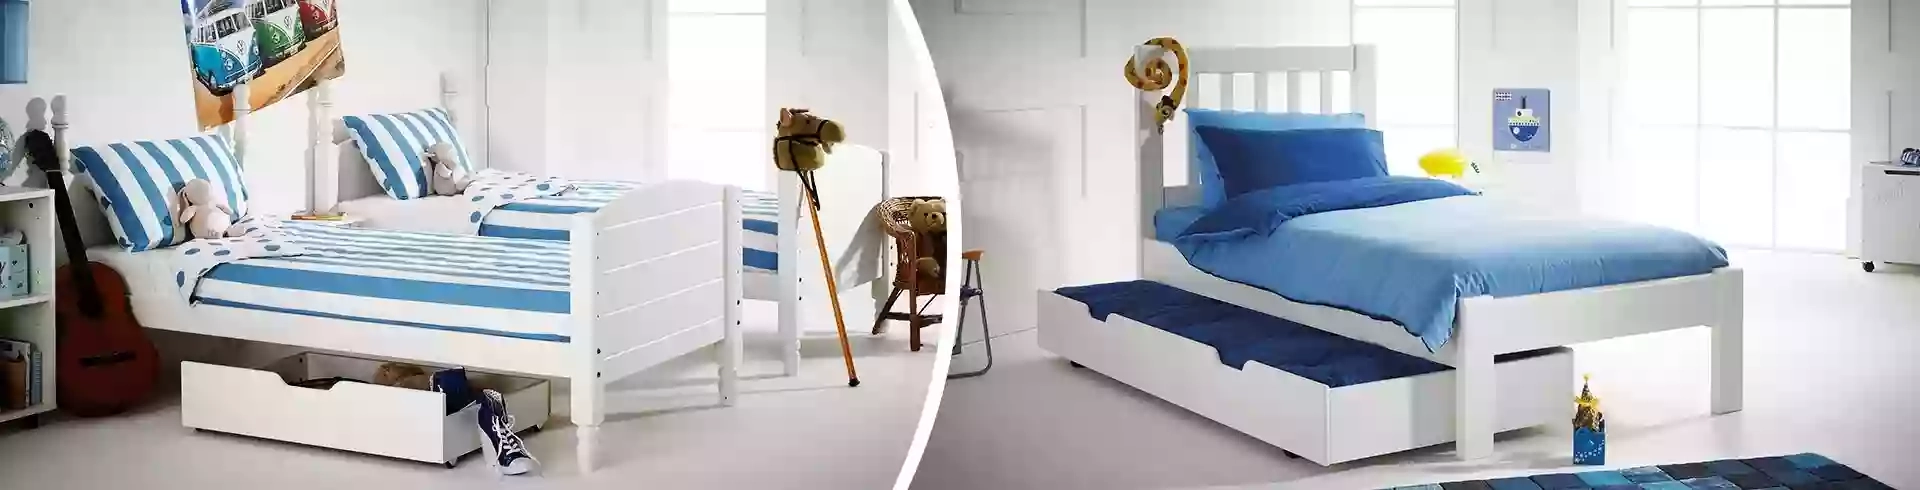 Scallywag Kids - Kids Beds & Bedroom Furniture